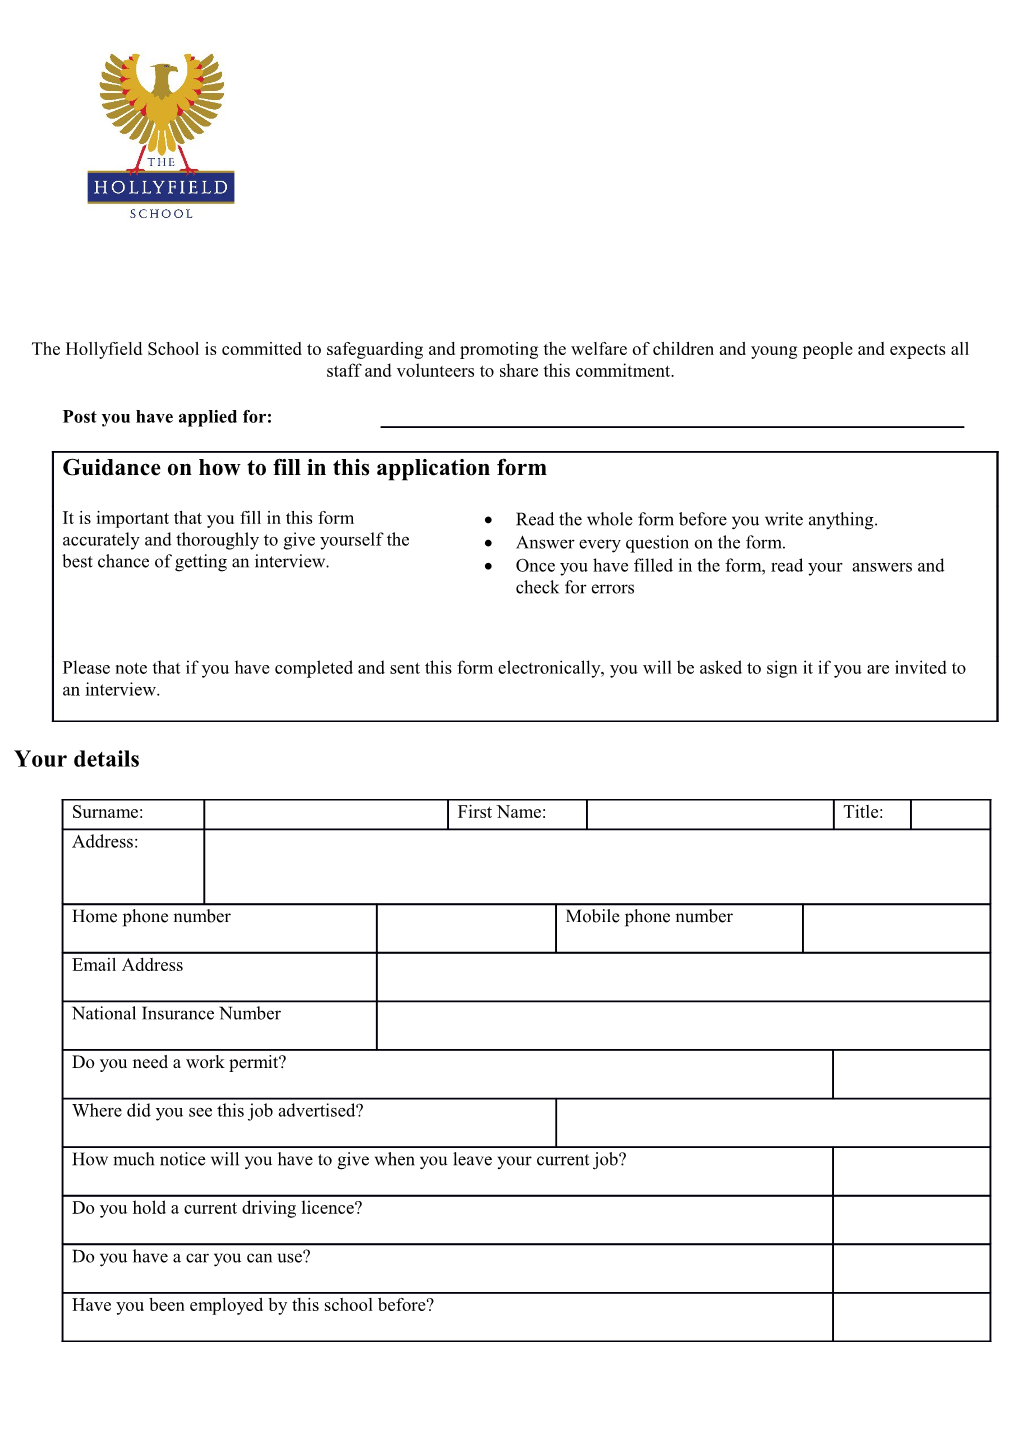 Royal Borough of Kingston Application Form